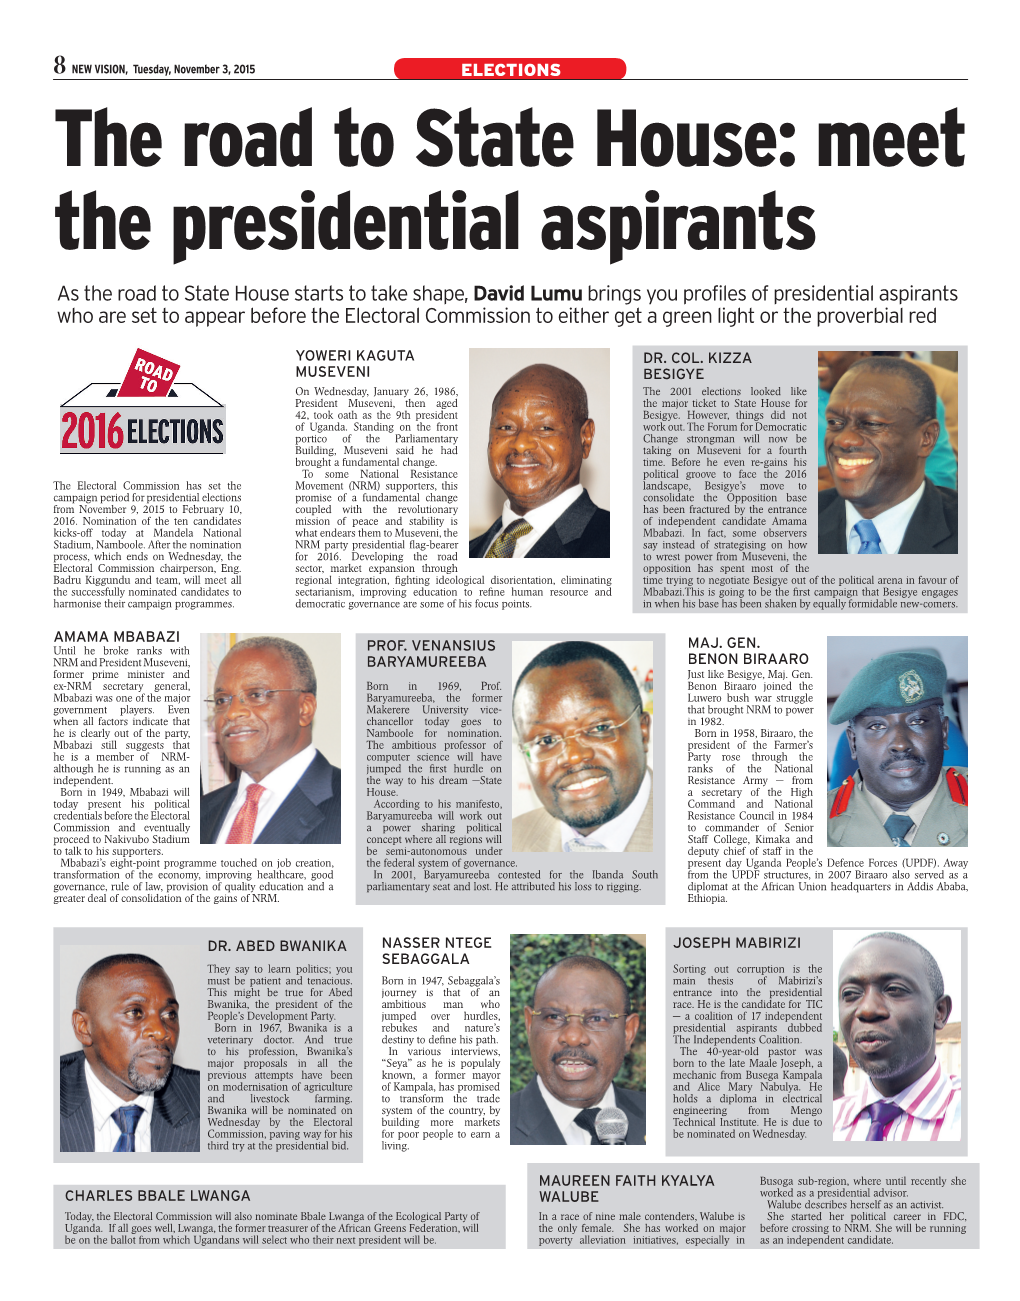 Meet the Presidential Aspirants